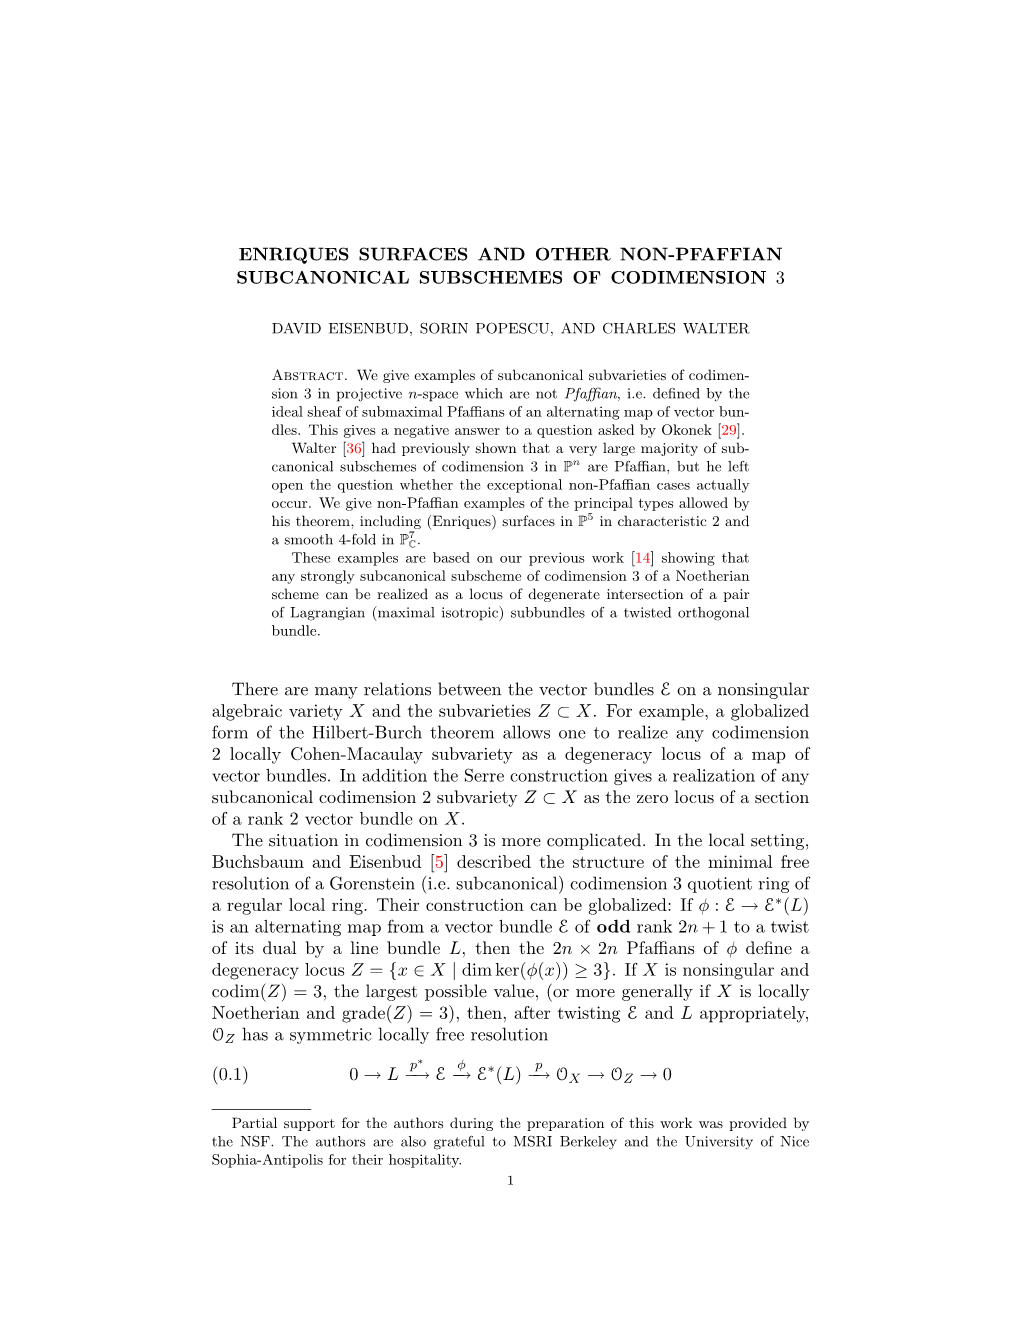 Non-Pfaffian Subcanonical Subschemes of Codimension 3